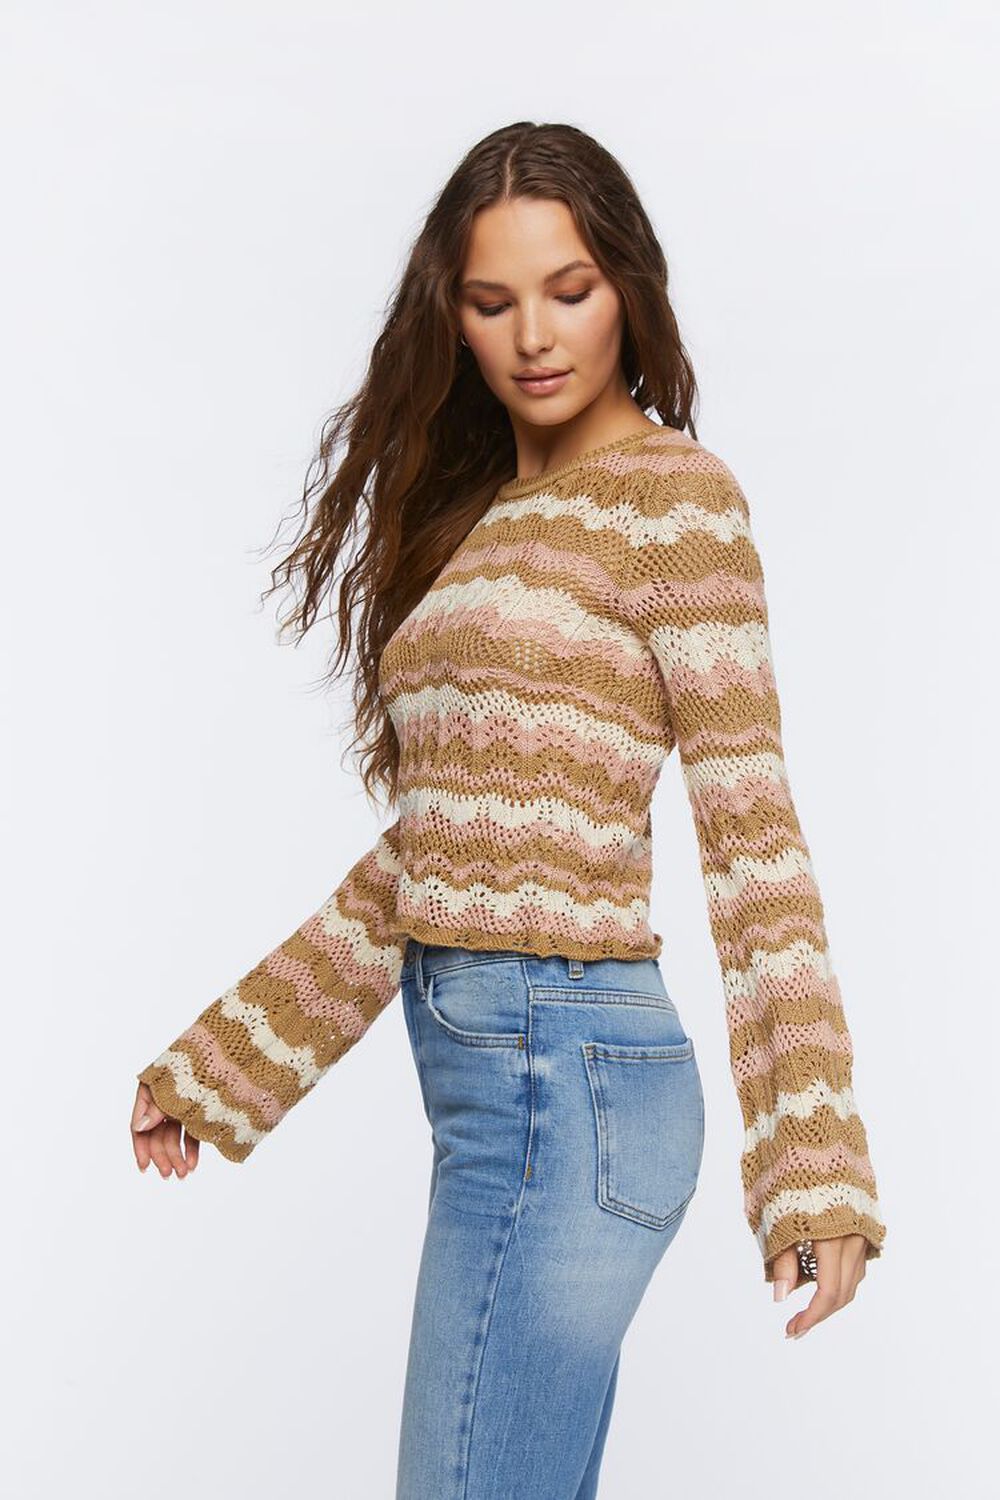 TOAST/MULTI Striped Crochet Sweater, image 3